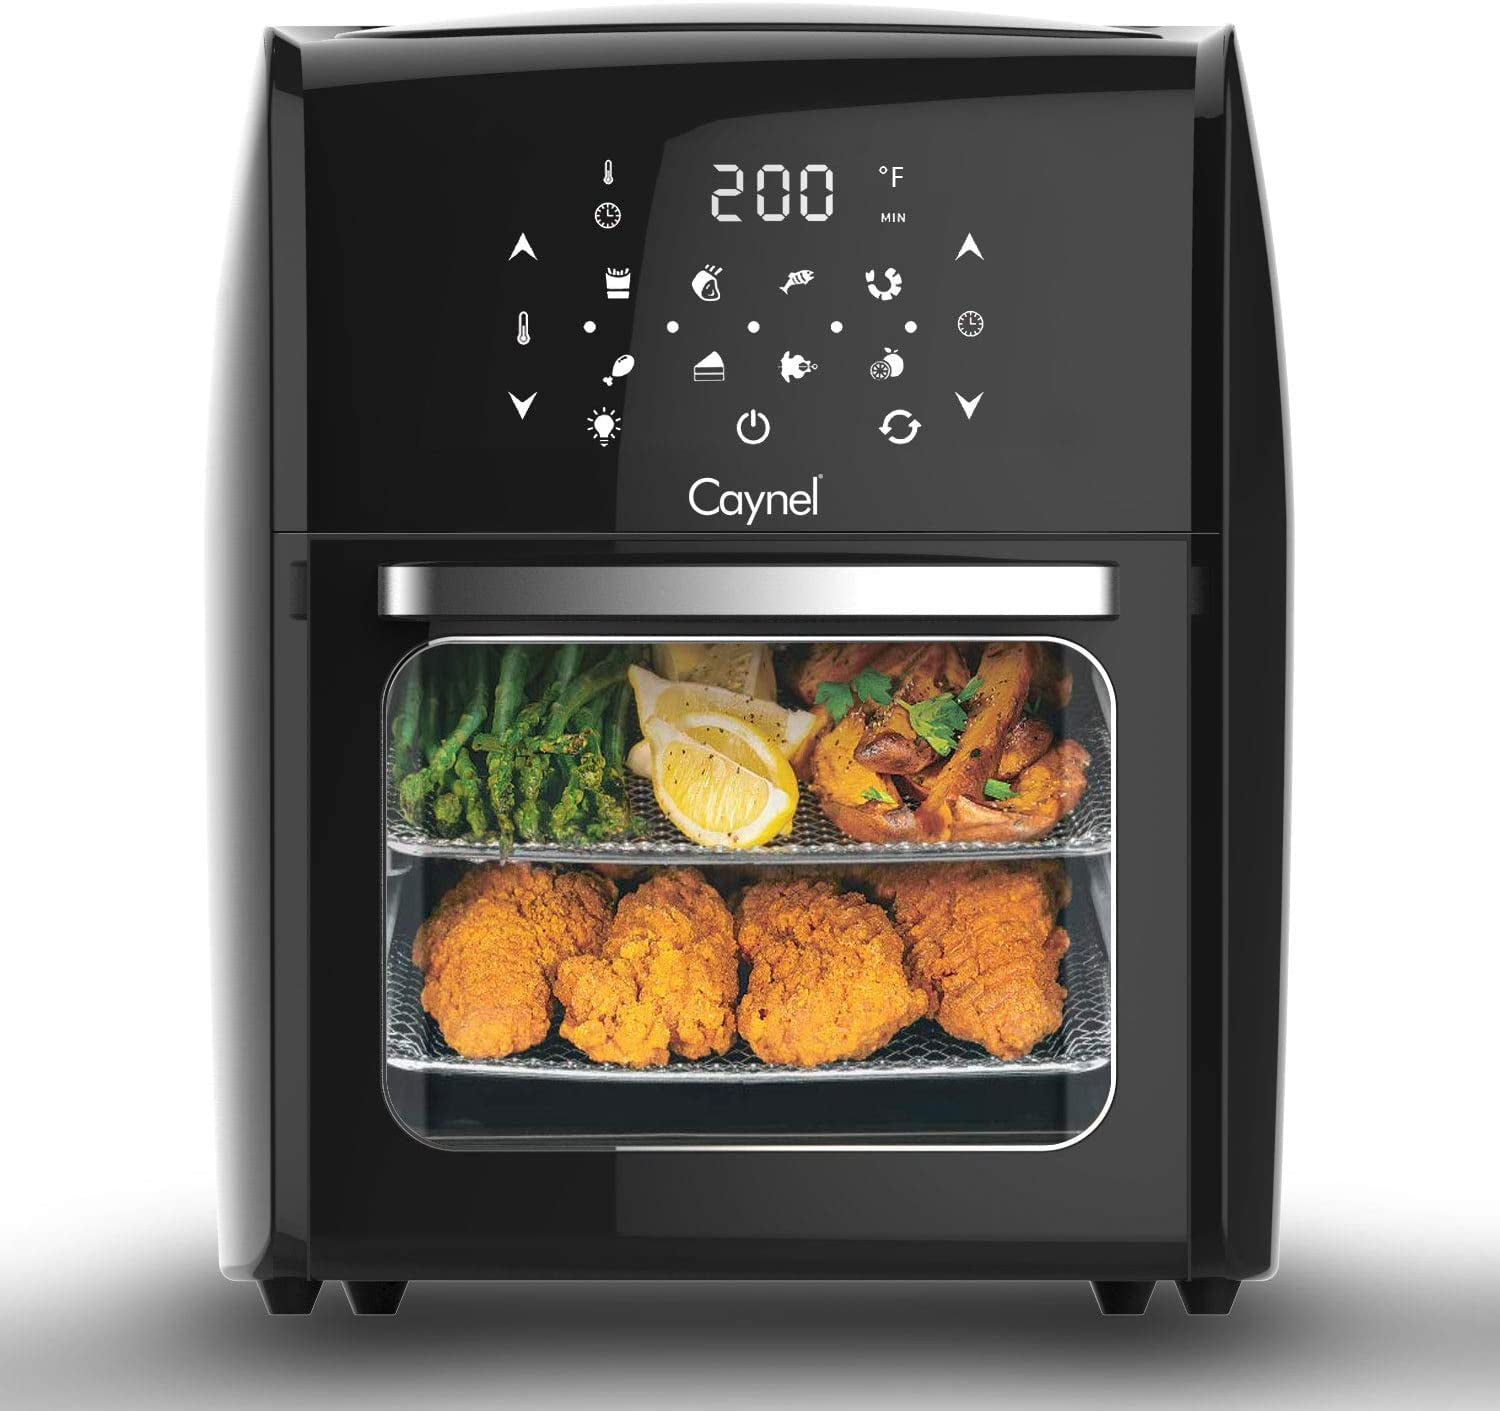 Caynel 5 Quart Compact Air Fryer,1400W Compact Non-Stick Dishwasher-Safe  Basket, Black